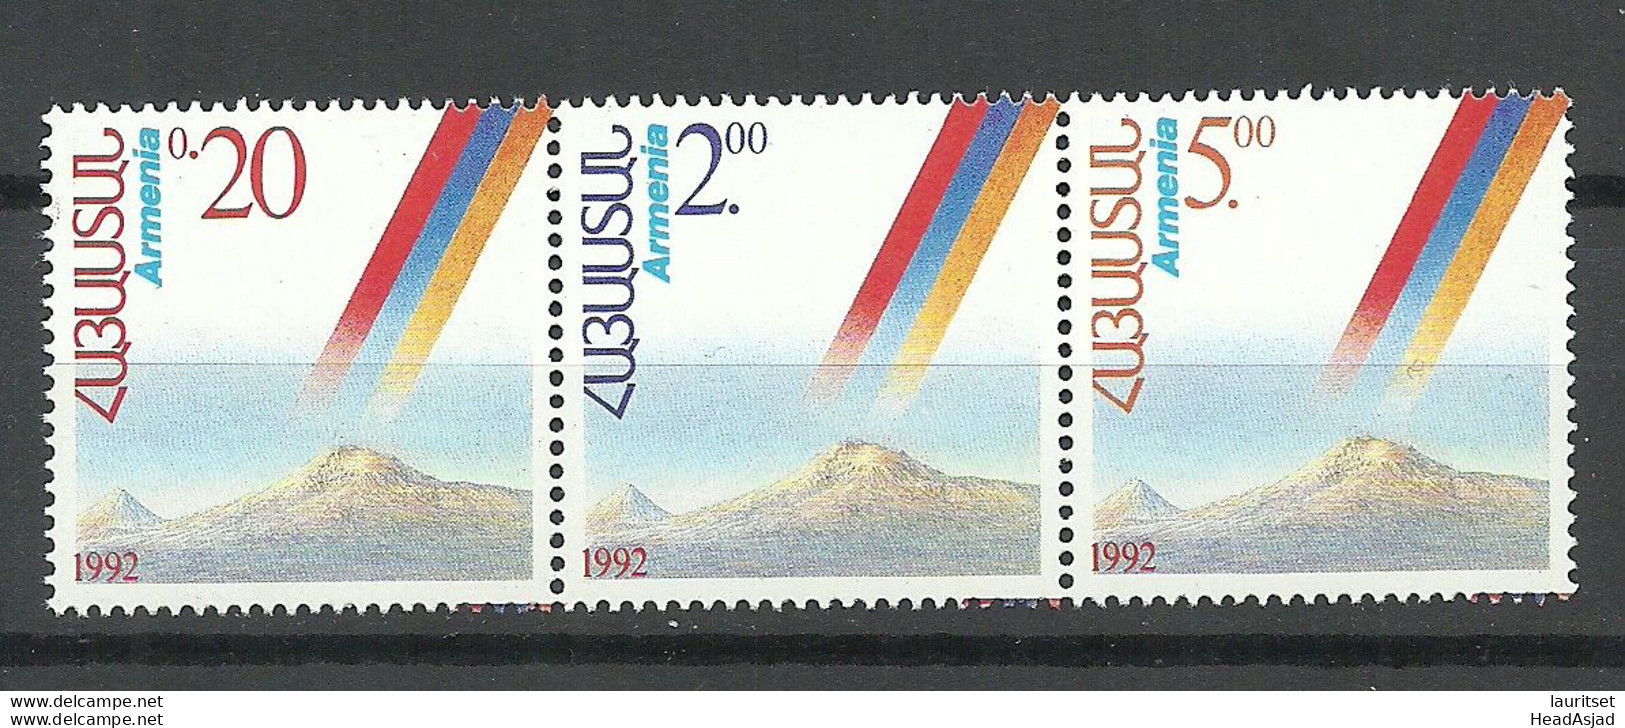 ARMENIEN Armenia 1992 Michel 194 - 196 MNH - Armenia